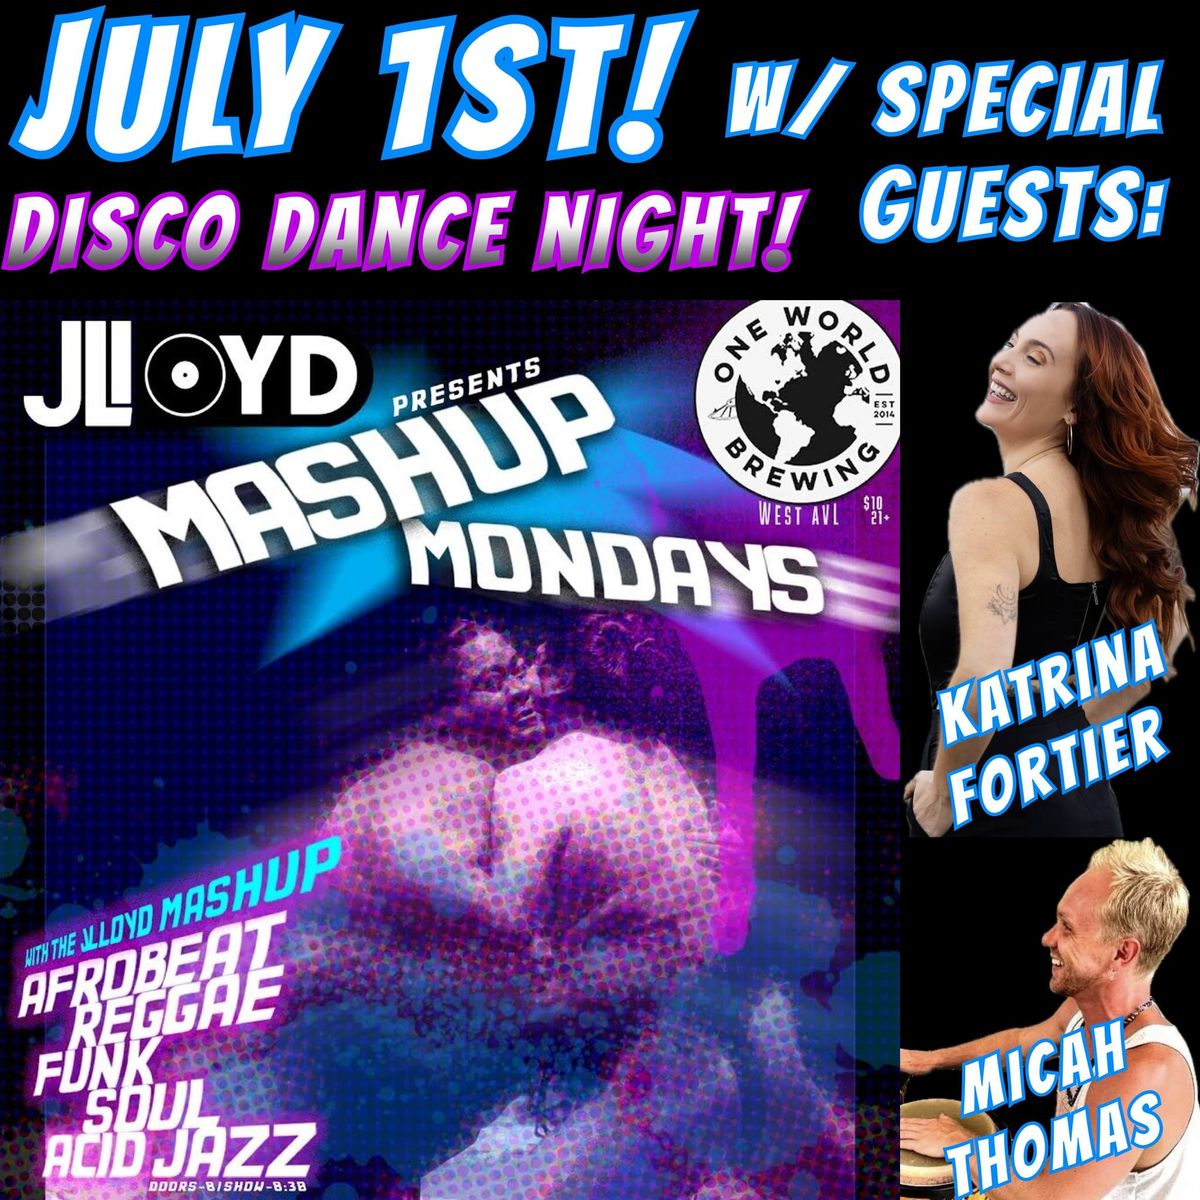 July 1st: Disco Dance MashUp! w\/ sp. guests Katrina Fortier & Micah Thomas!